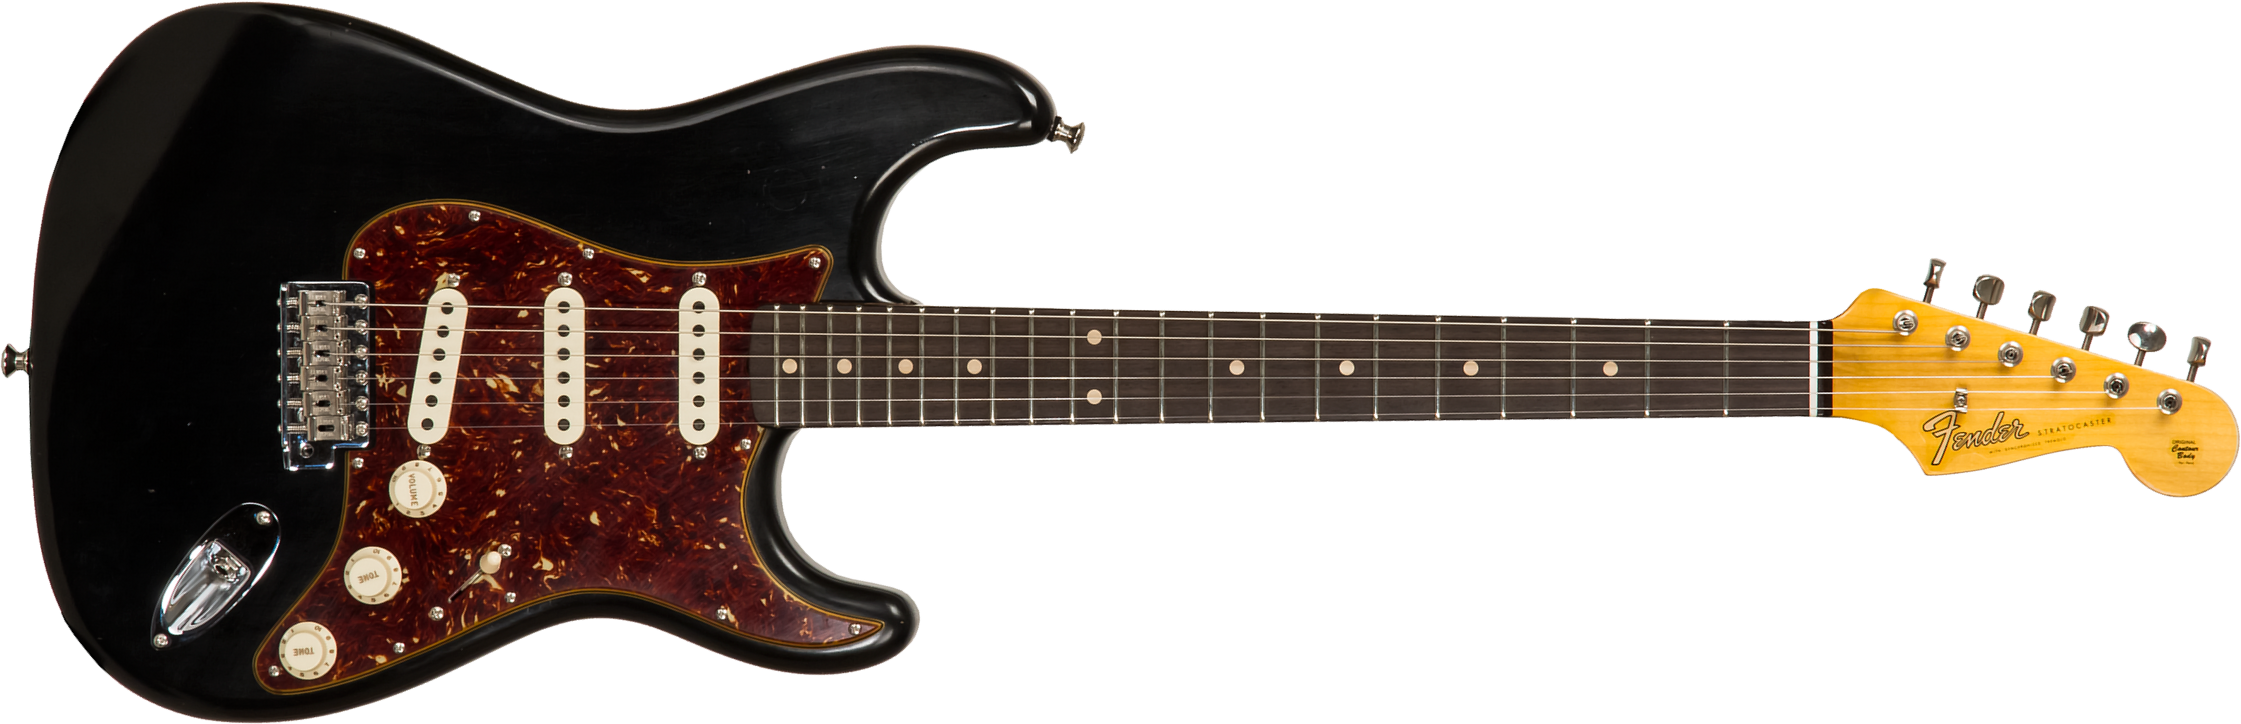 Fender Custom Shop Strat Postmodern 3s Trem Rw #xn13616 - Journeyman Relic Aged Black - Guitarra eléctrica con forma de str. - Main picture